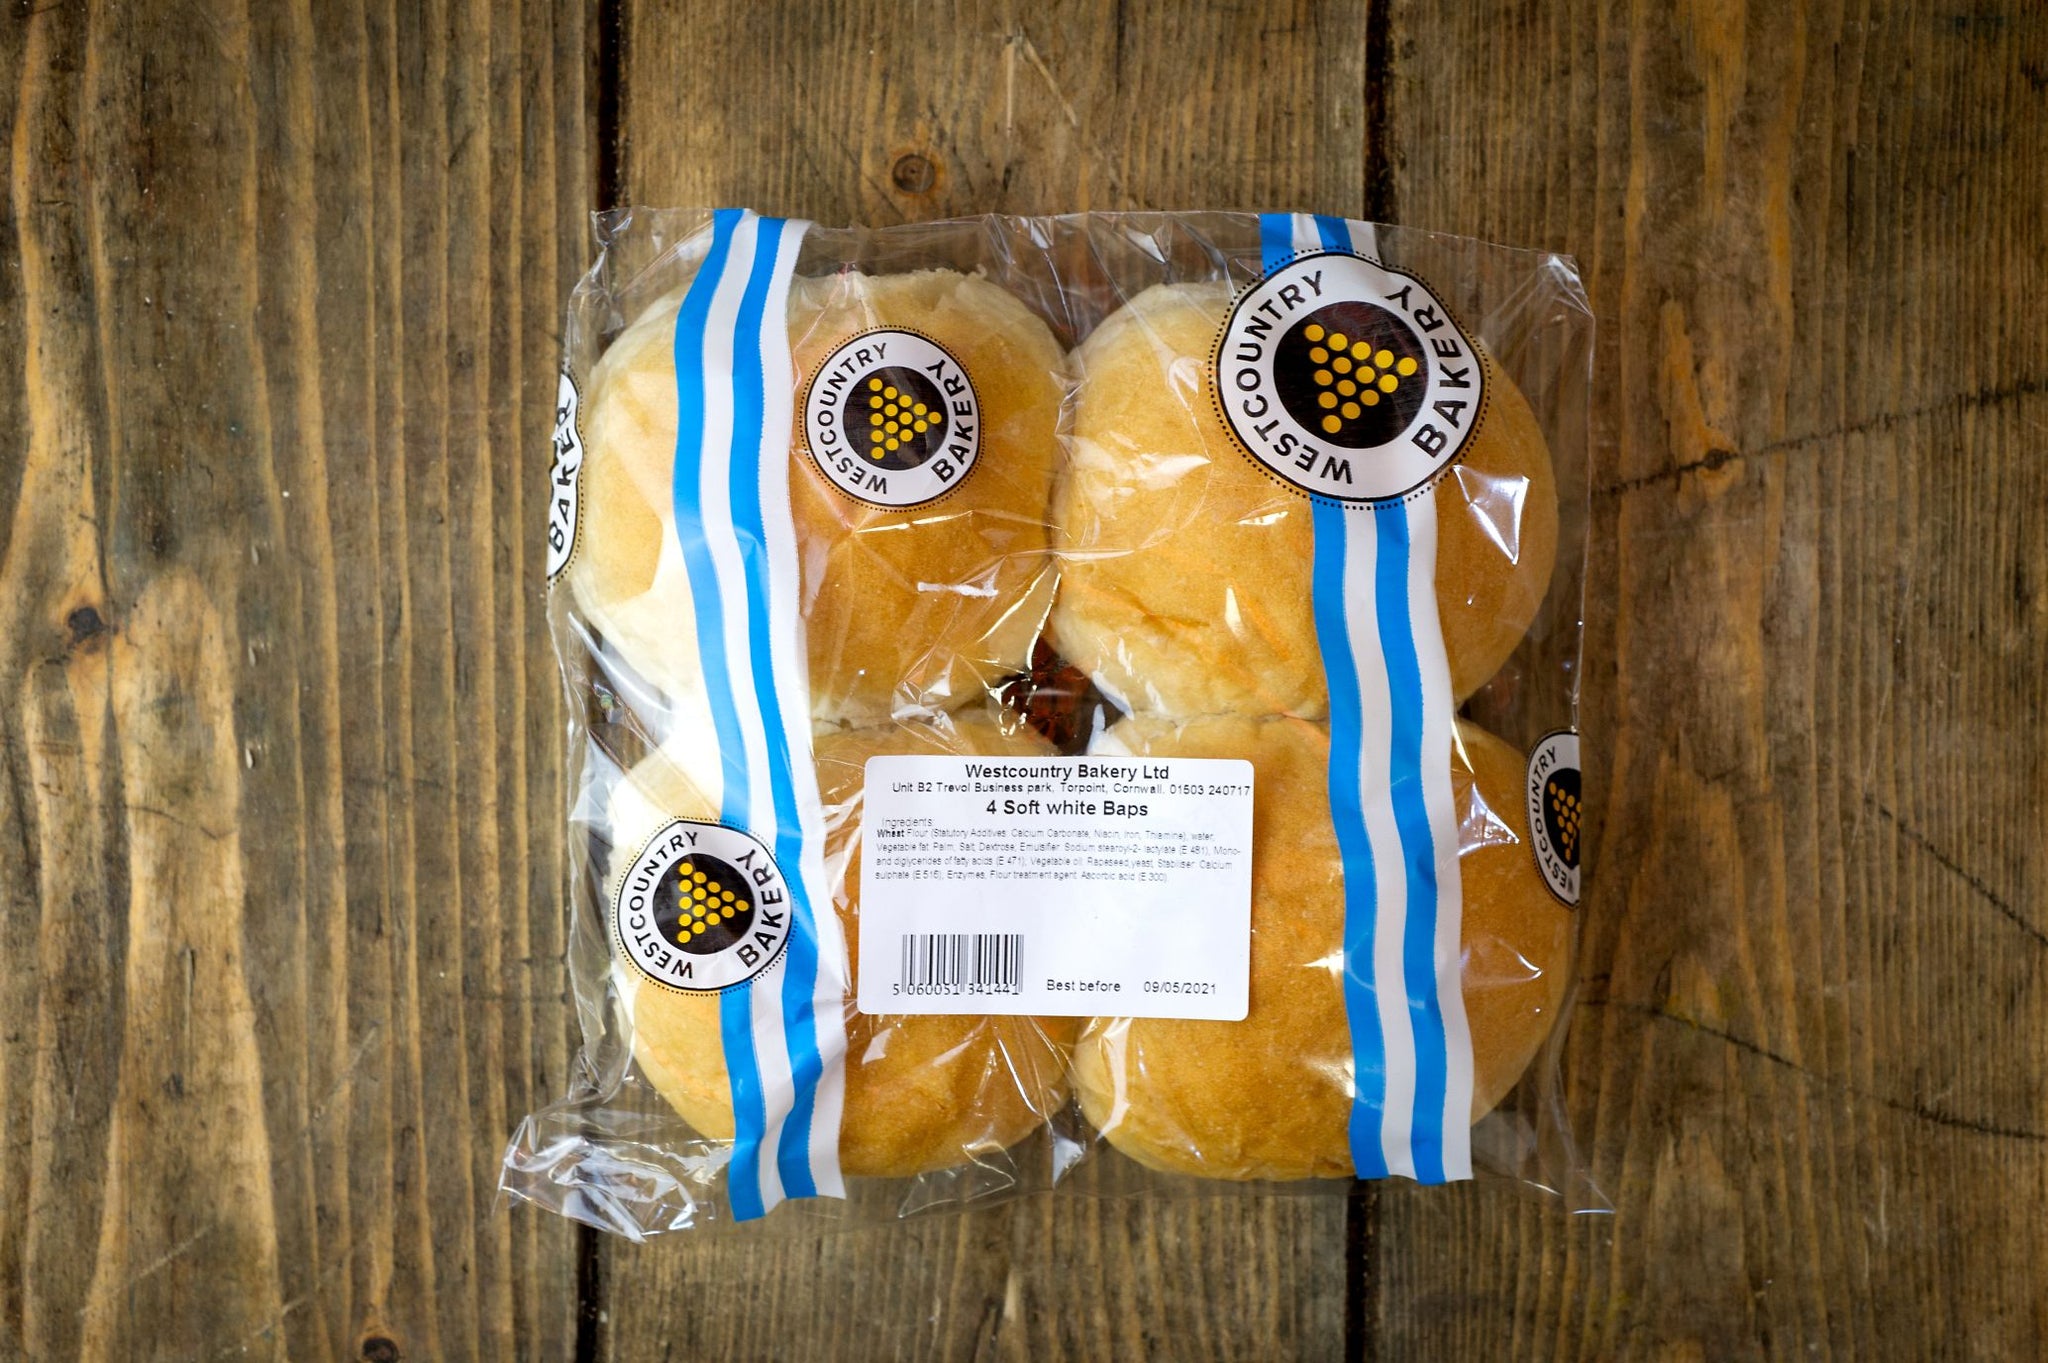 Bakery: Bread (Westcountry)- White Frisbee bap x 4